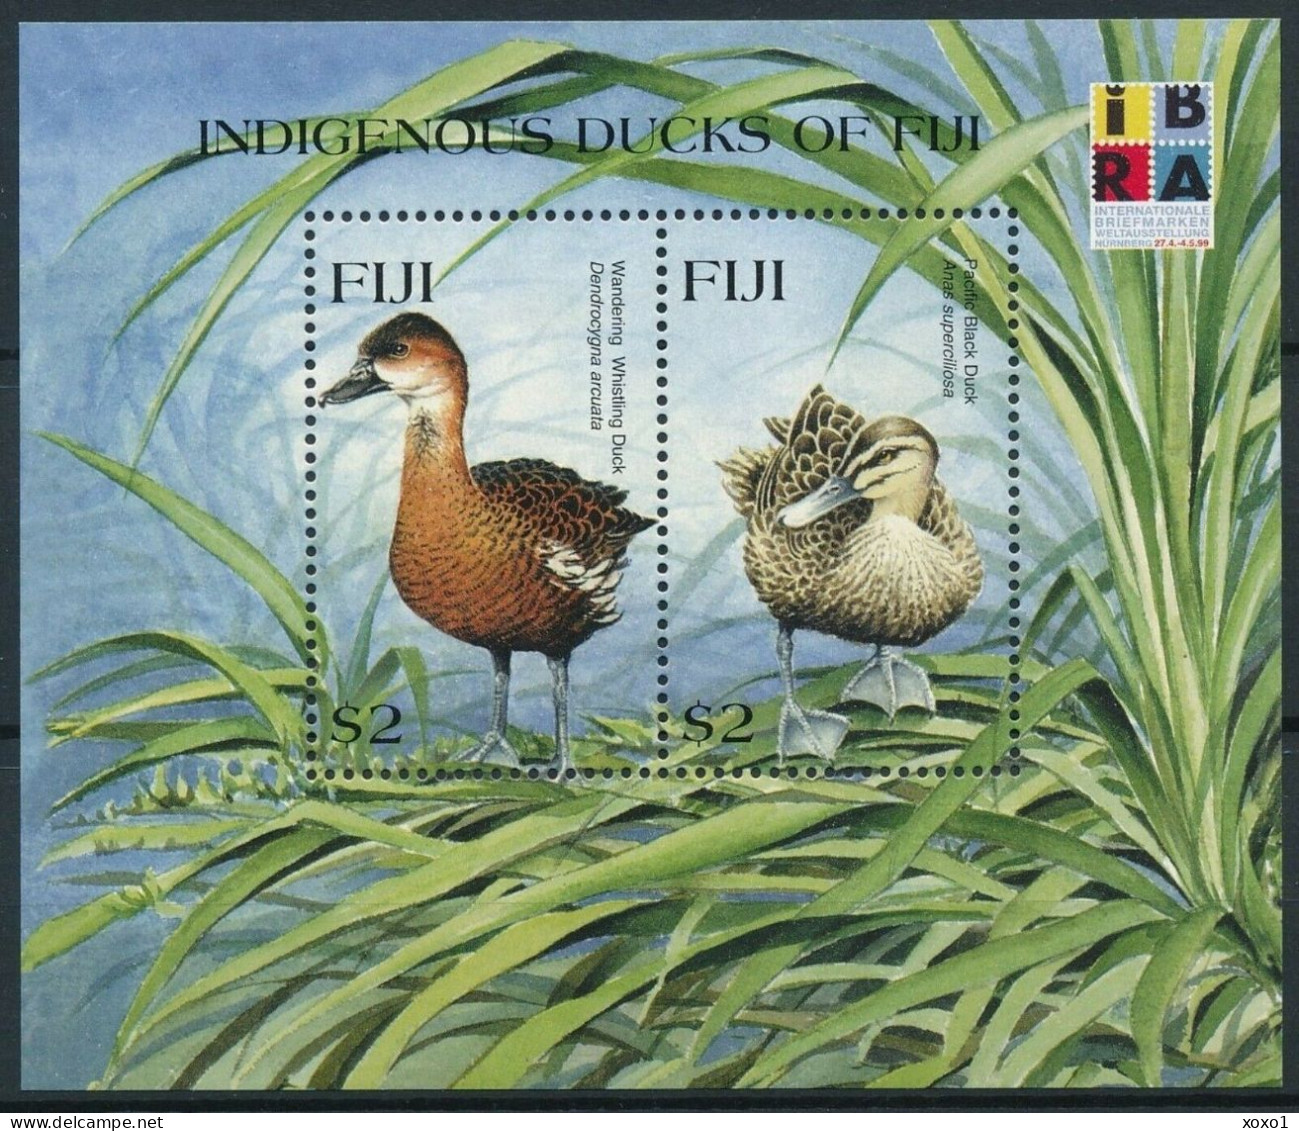 Fiji 1999 MiNr. 878 - 879 (Block 30) Fidschi-Inseln Birds Ducks Vogel IBRA ’99, Nuremberg S\sh MNH** 6,00 € - Ducks